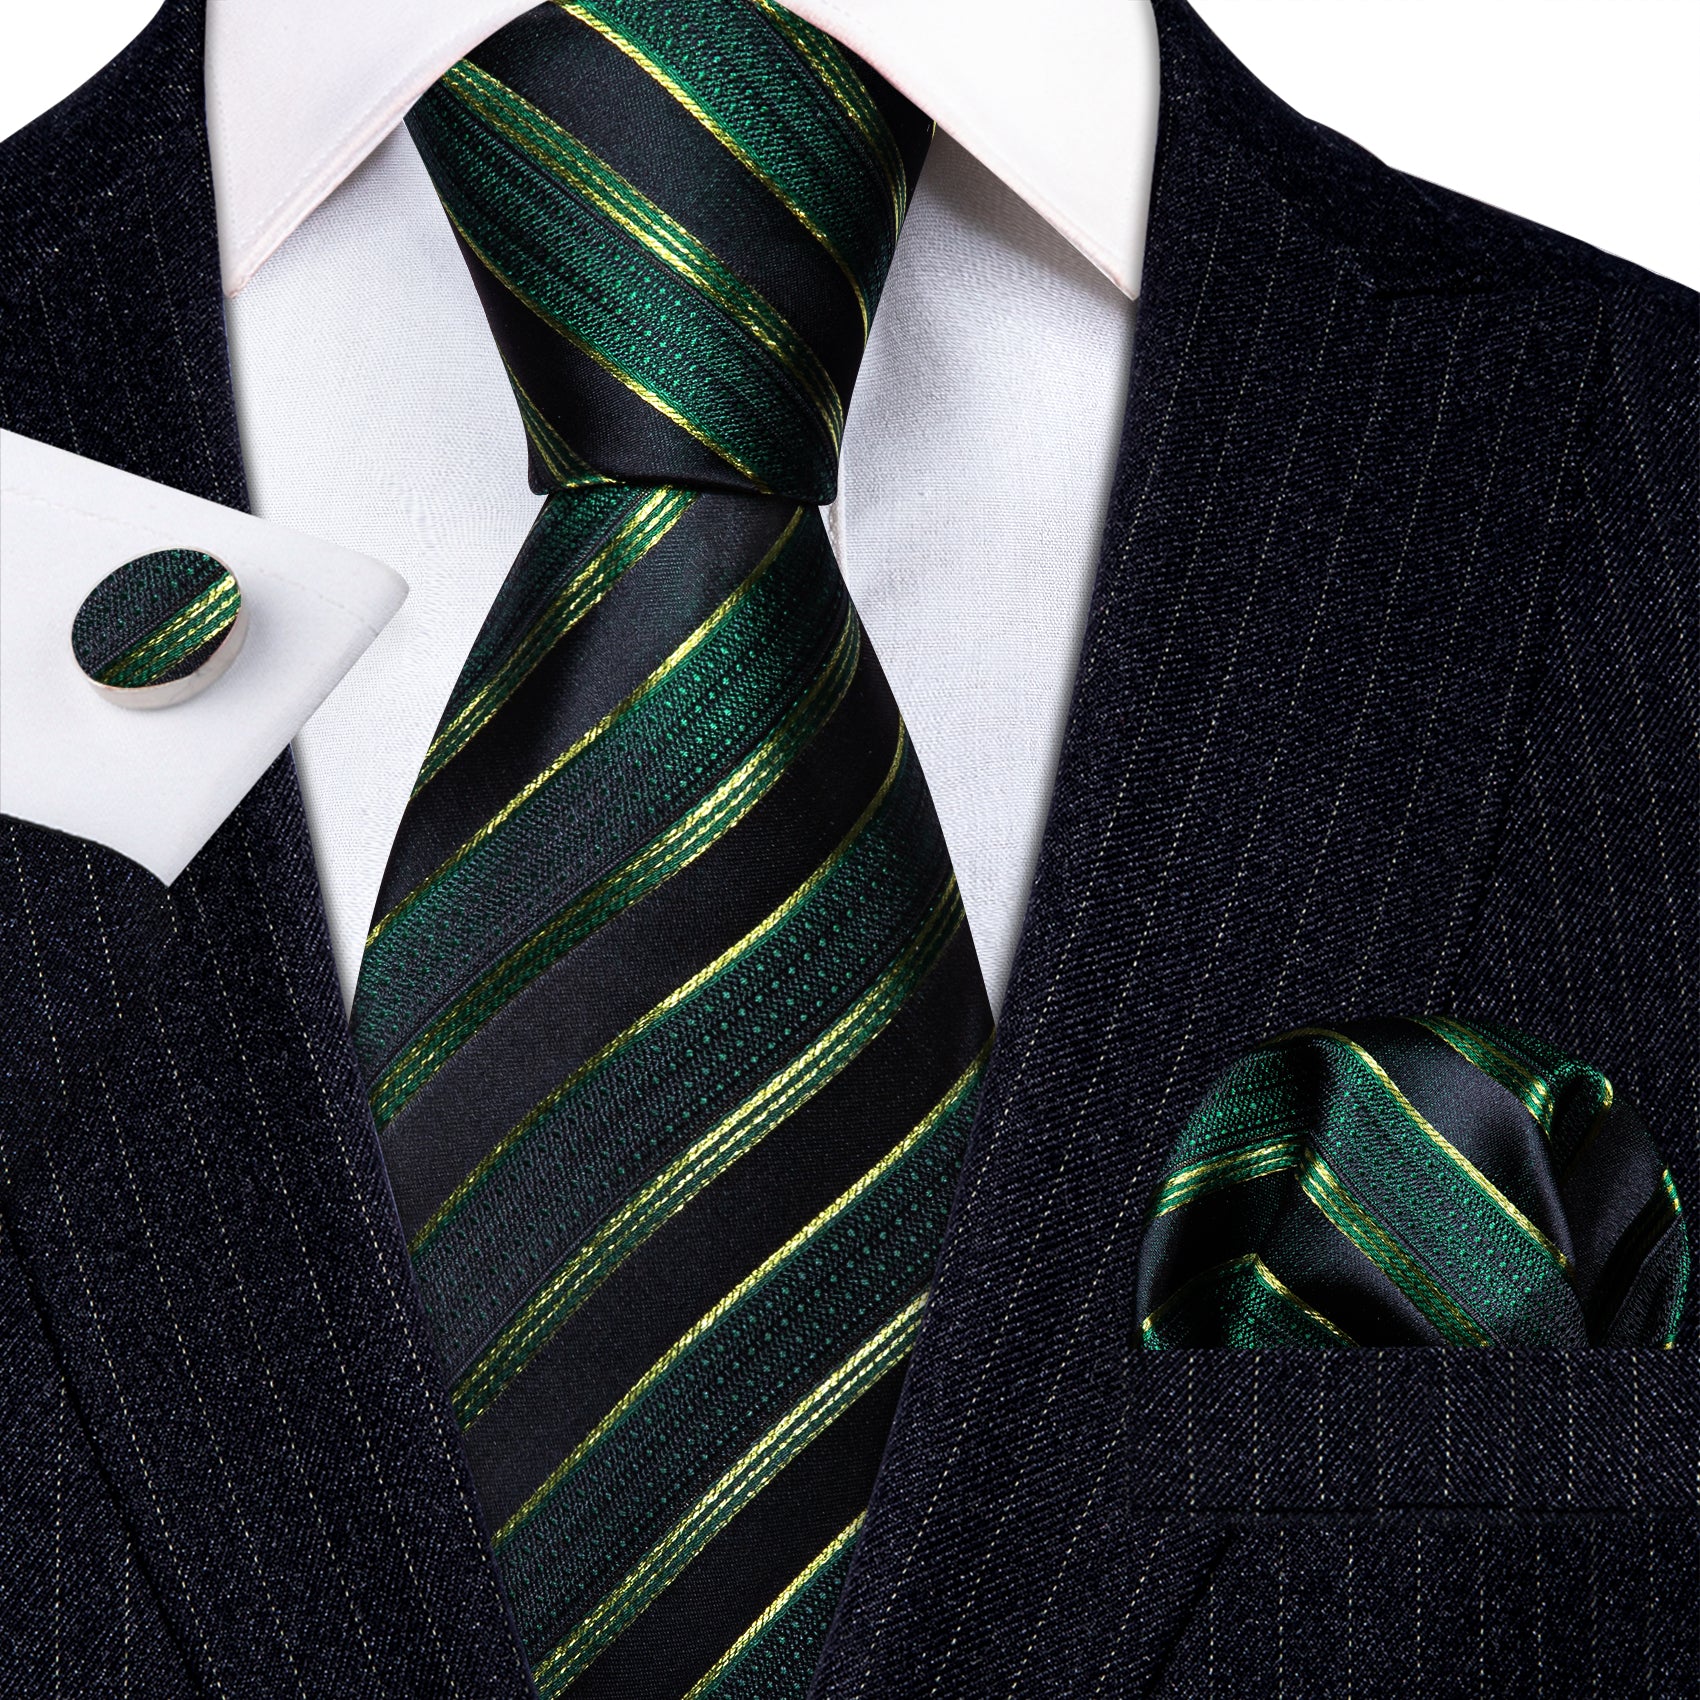 Barry Wang Light Green Necktie Black Striped Silk Tie Set for Wedding 